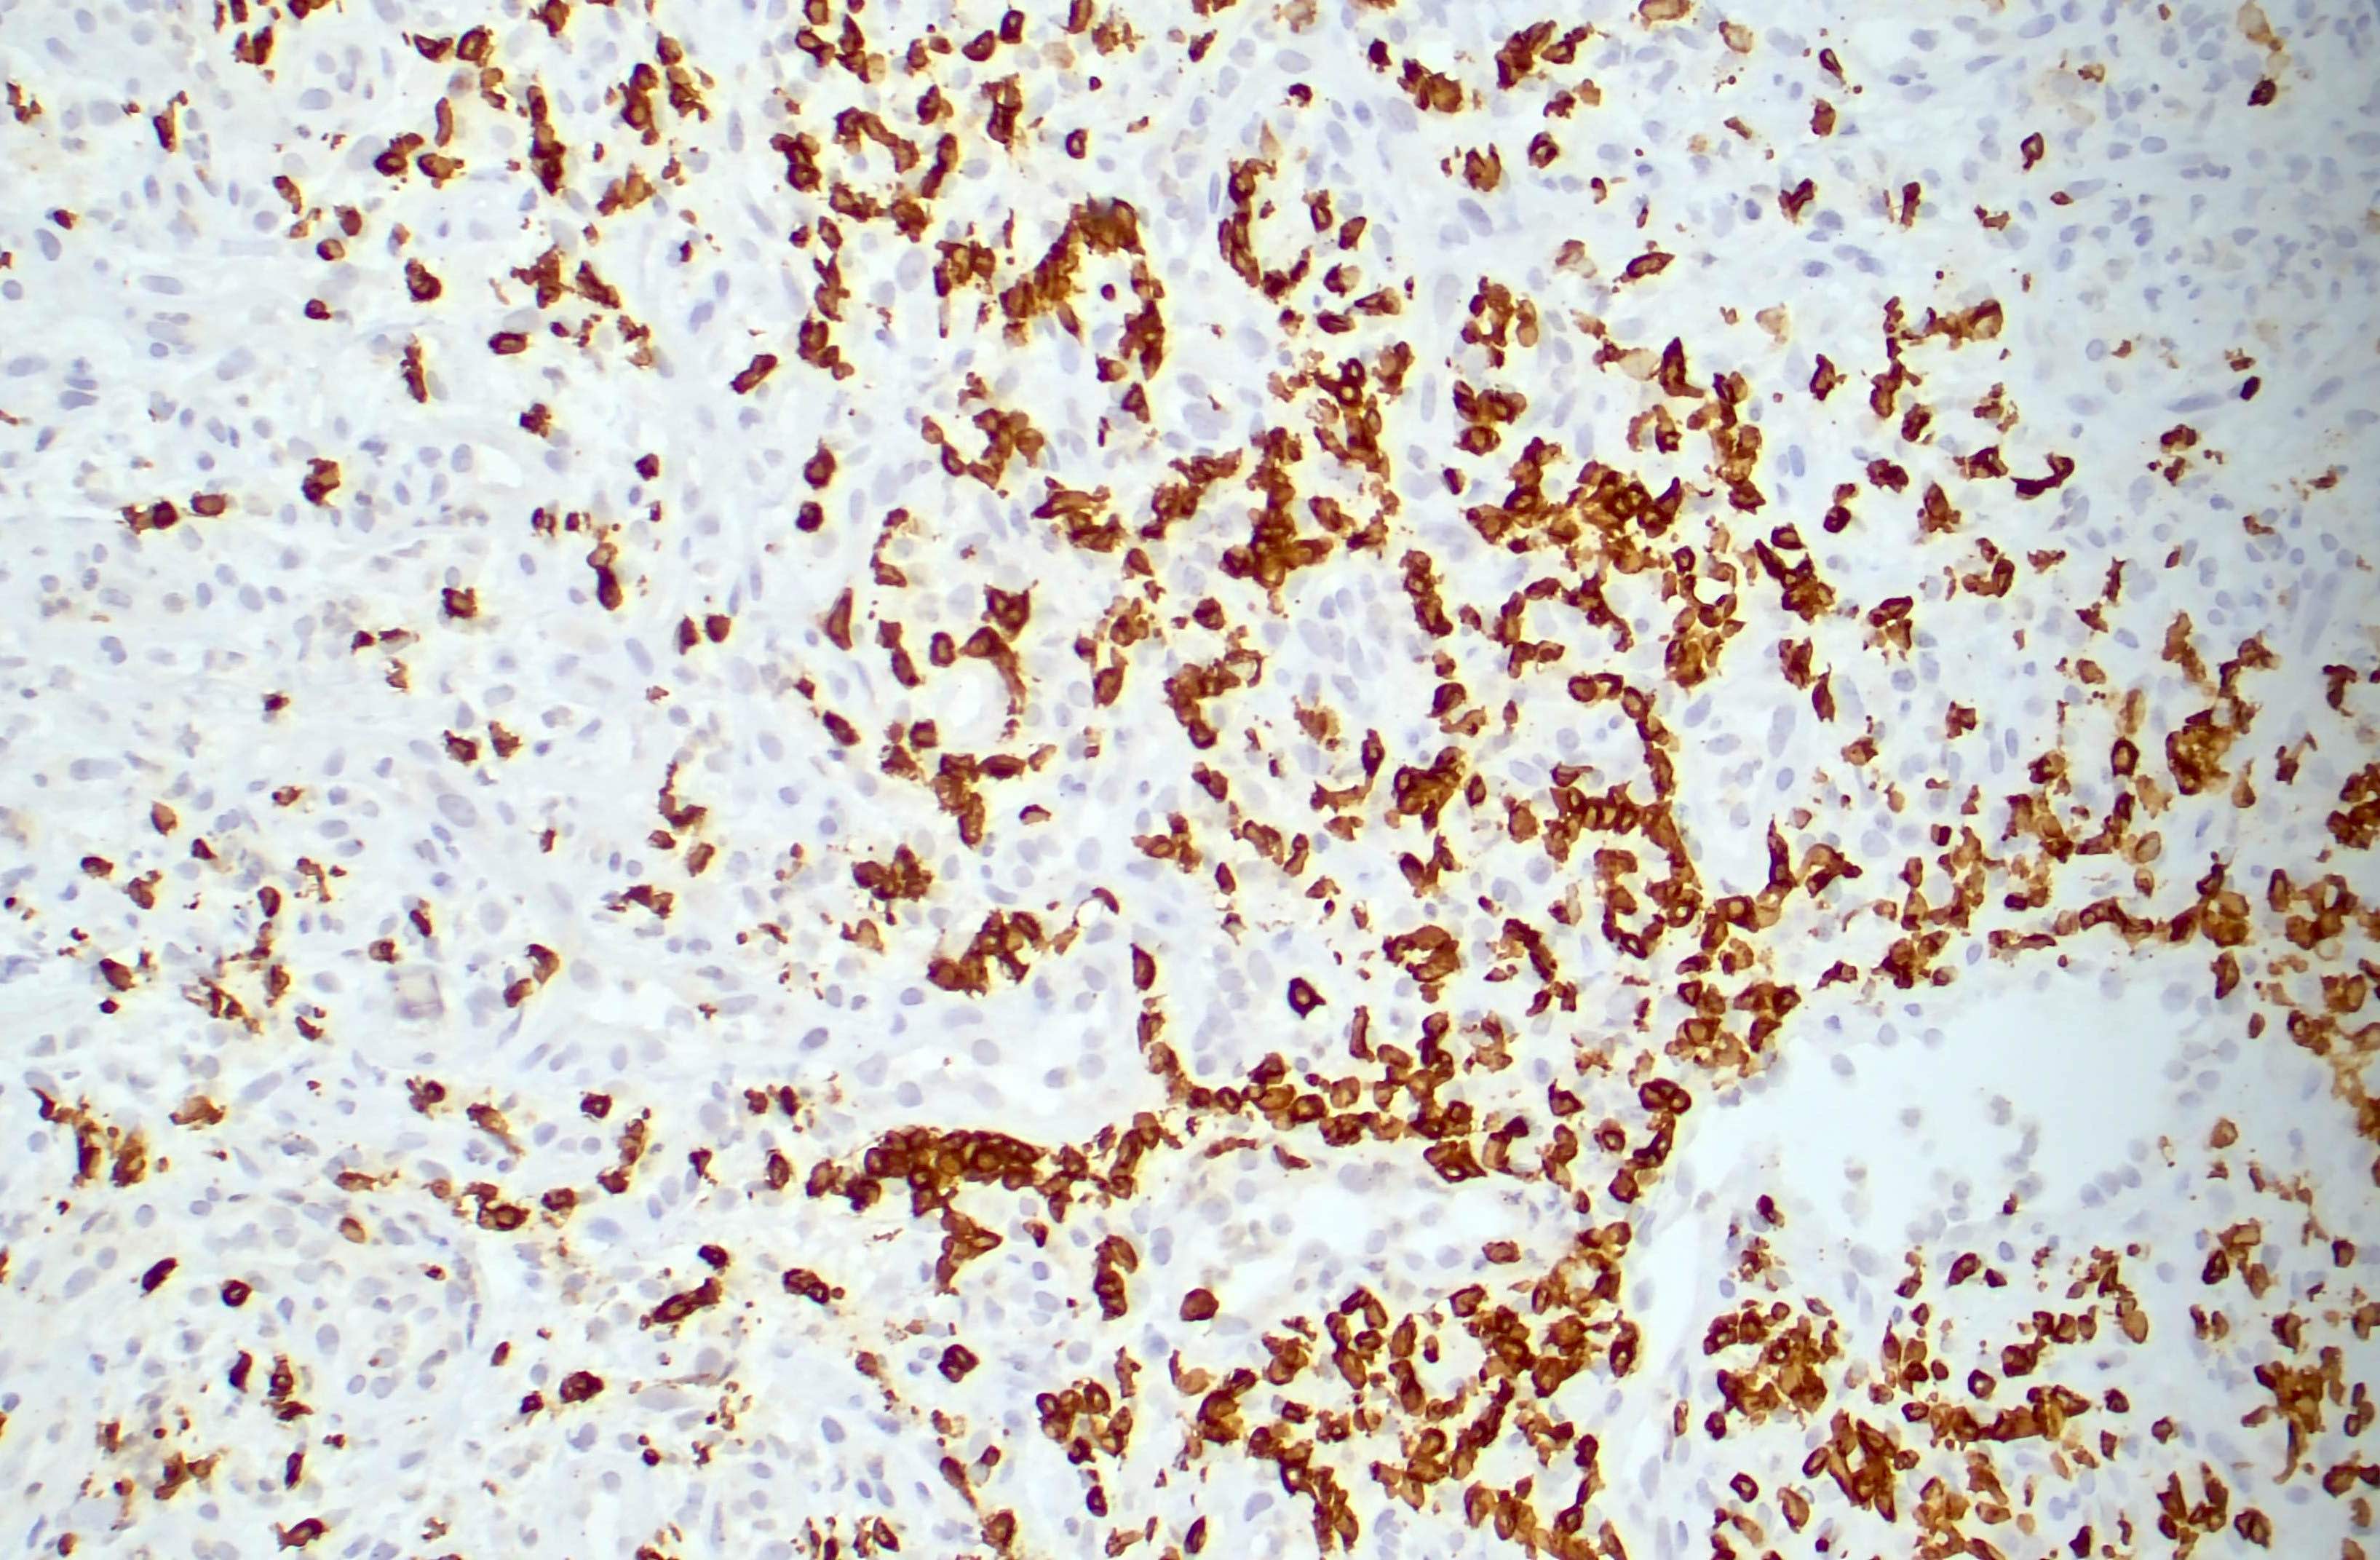 CD3 positive large cells